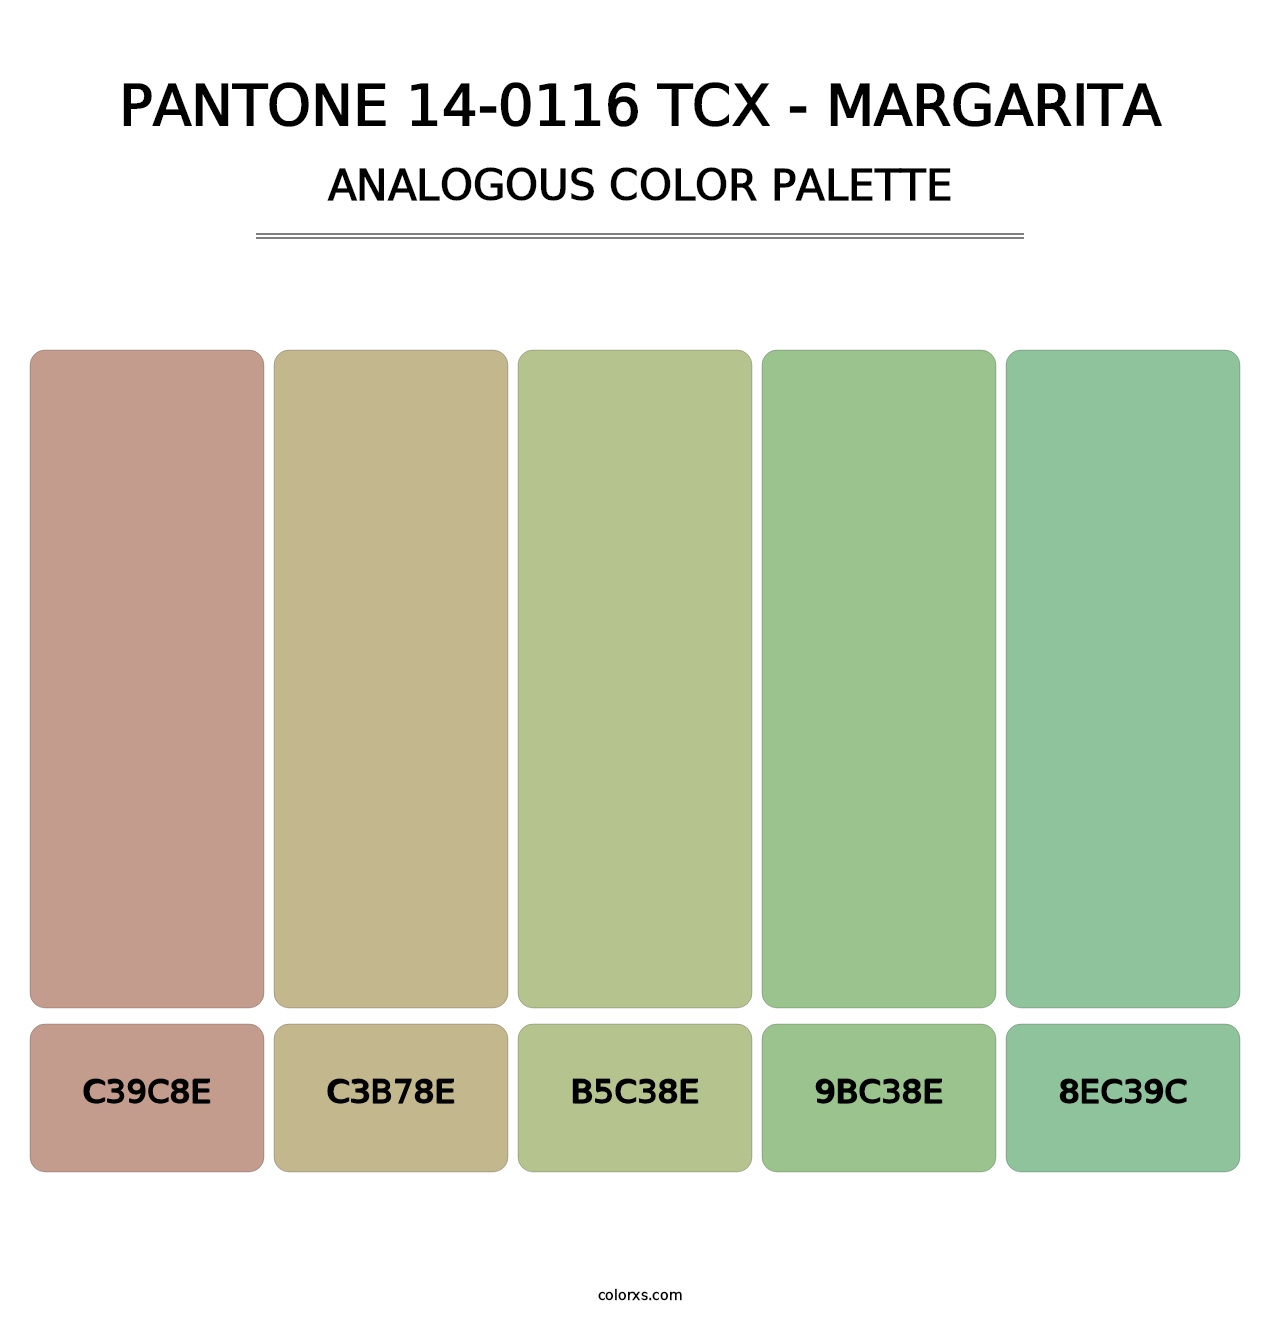 PANTONE 14-0116 TCX - Margarita - Analogous Color Palette